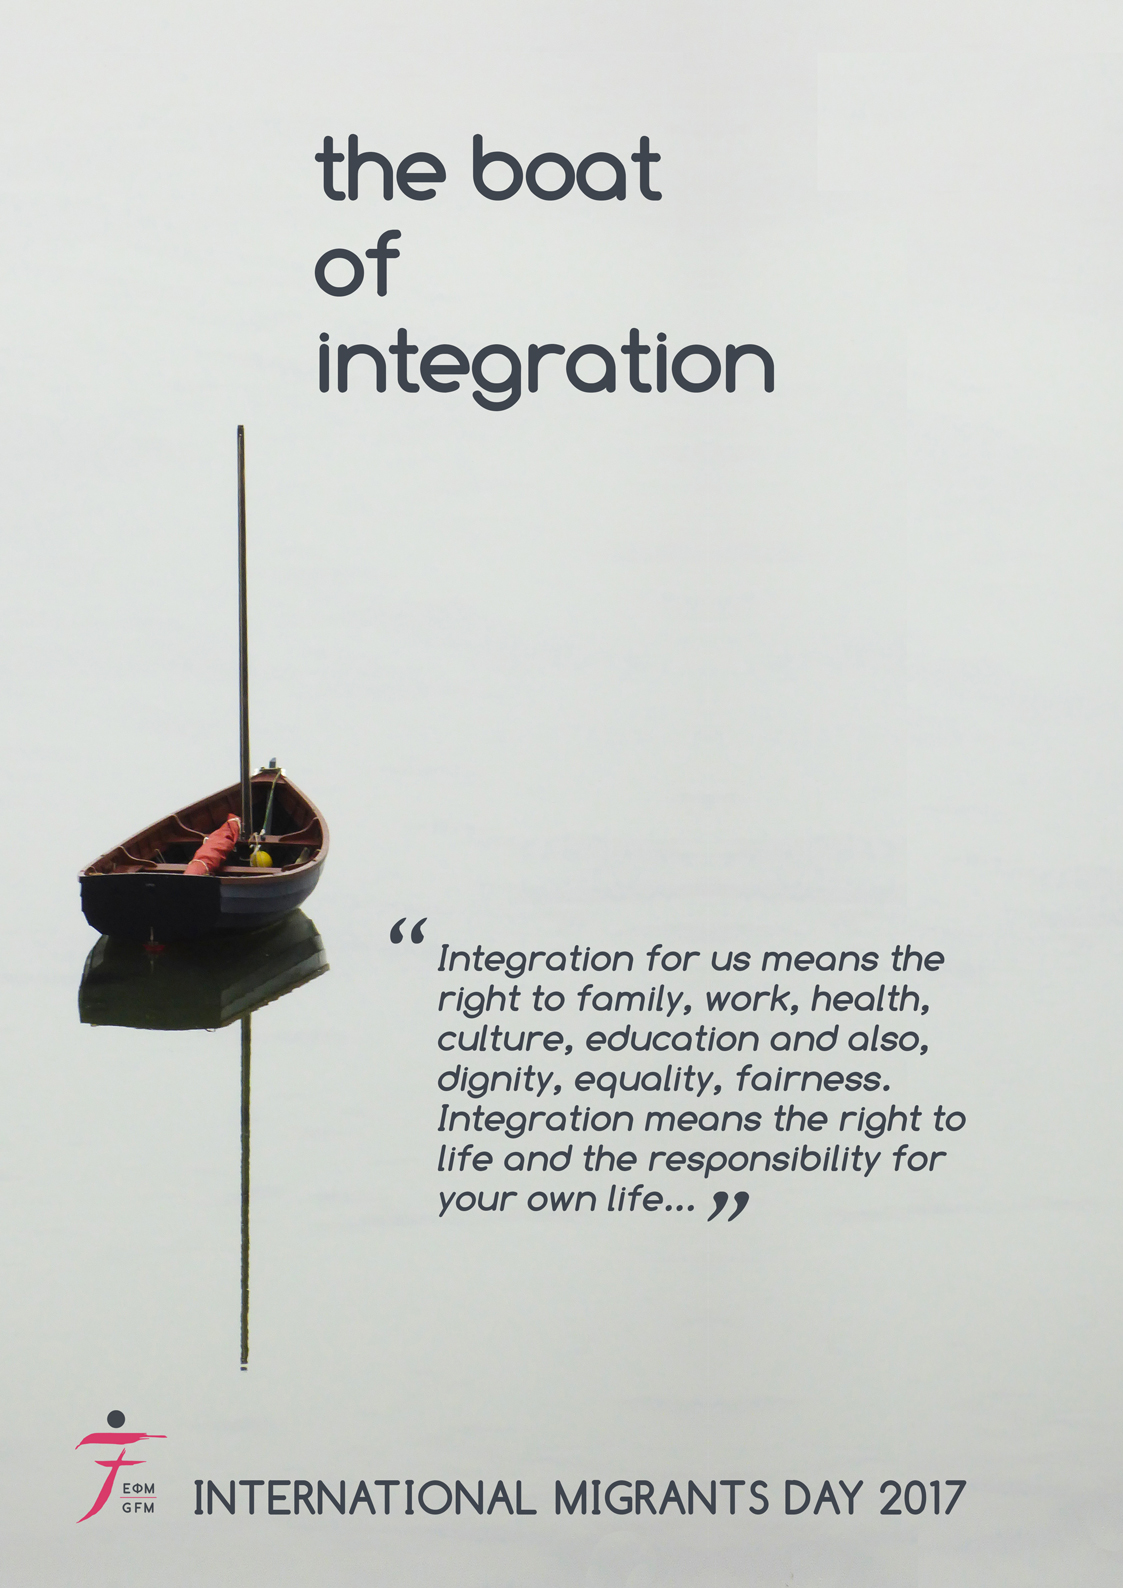 Integration, for us, means...